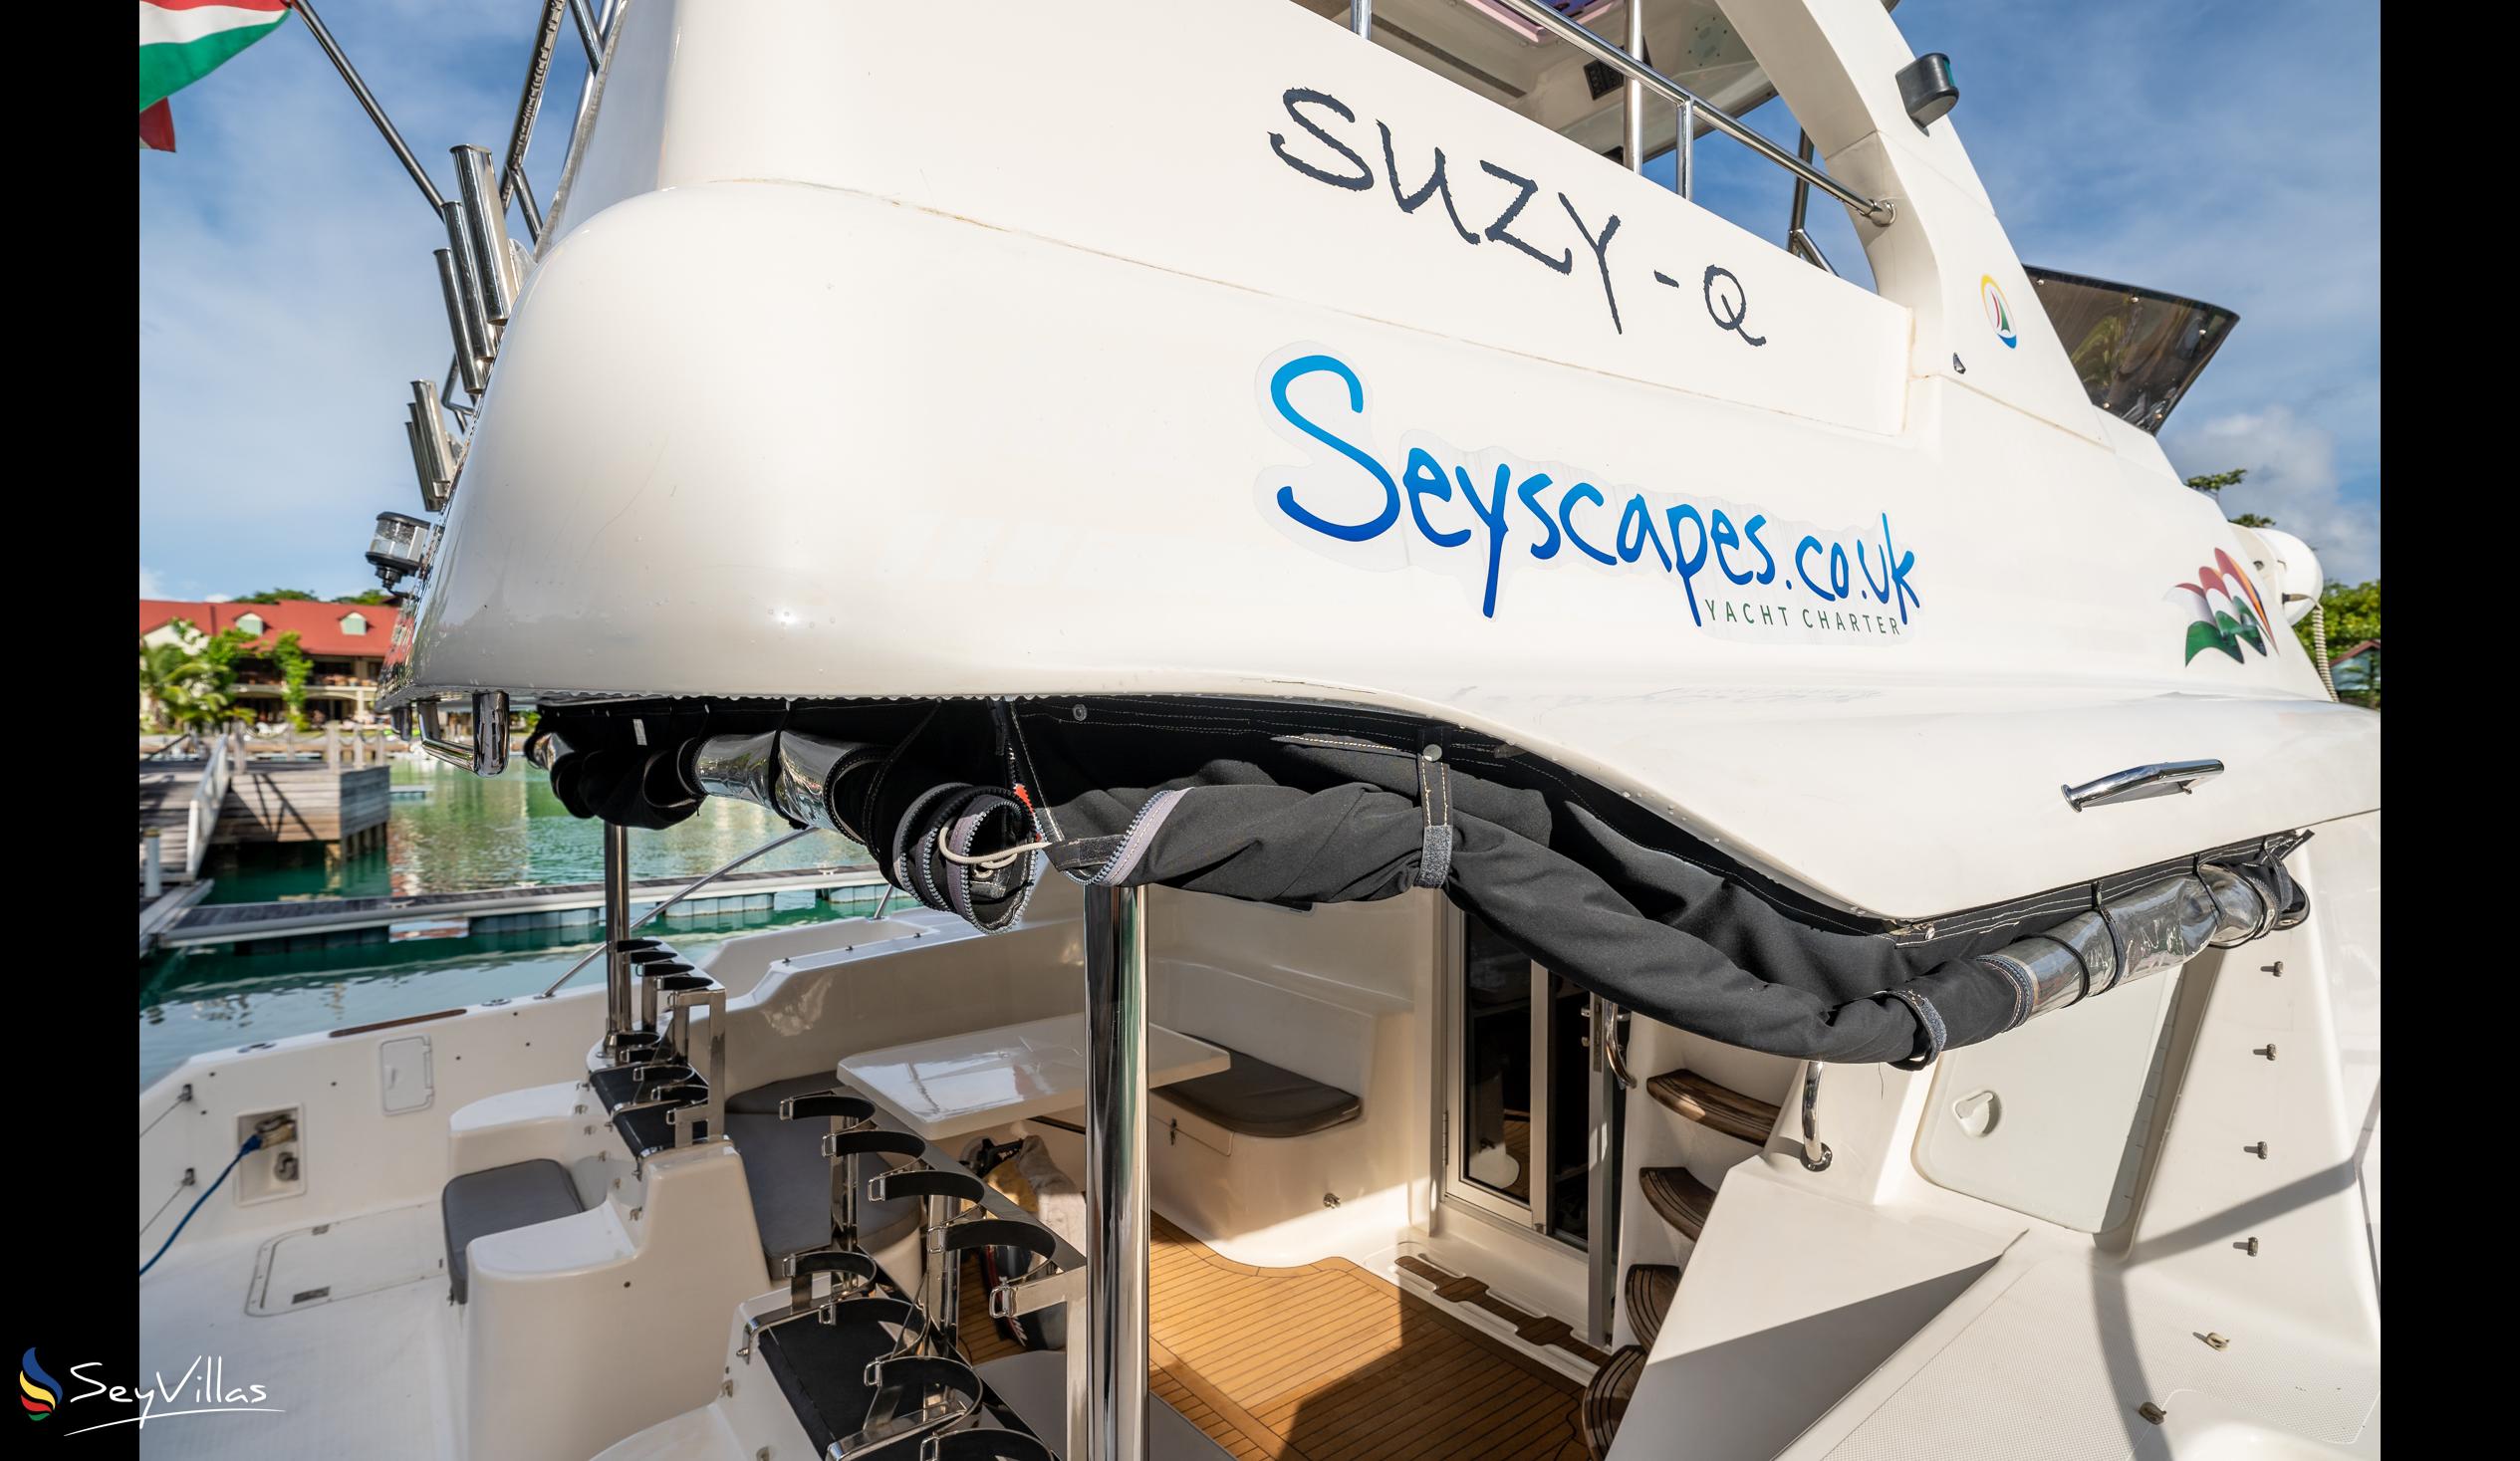 Foto 59: Seyscapes Yacht Charter - Vollcharter Suzy Q - Seychellen (Seychellen)